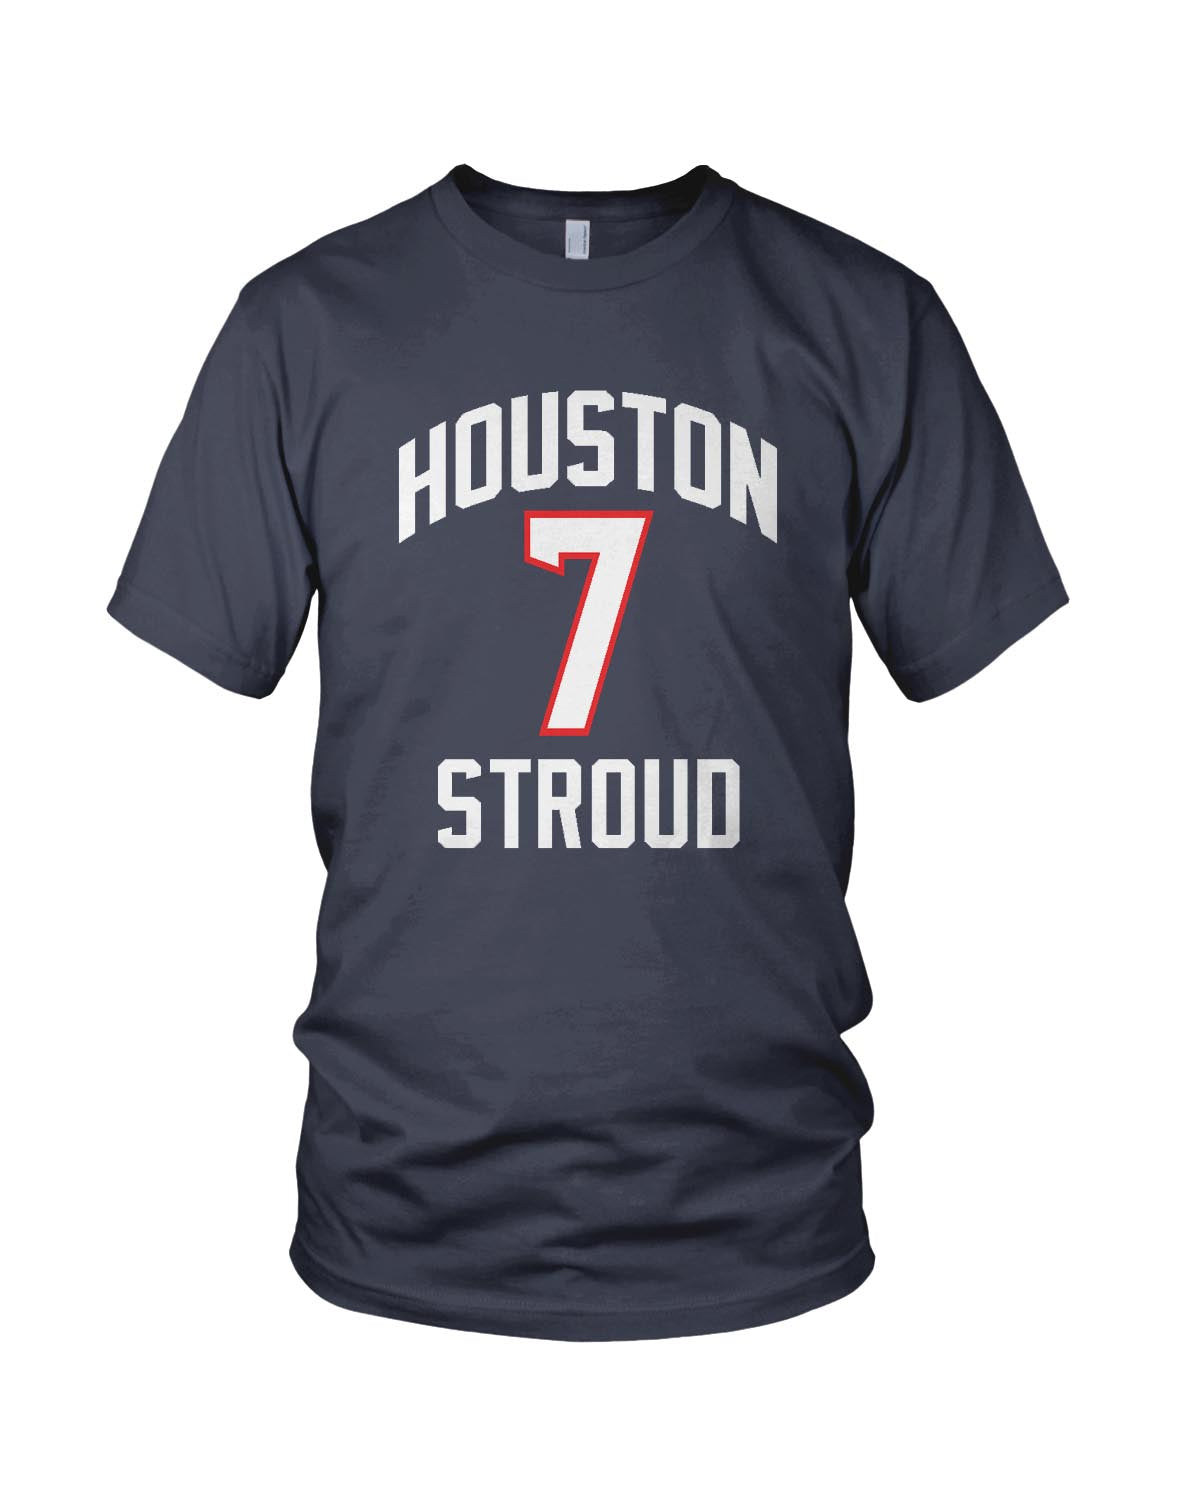 Houston Stroud Short Sleeve T shirt